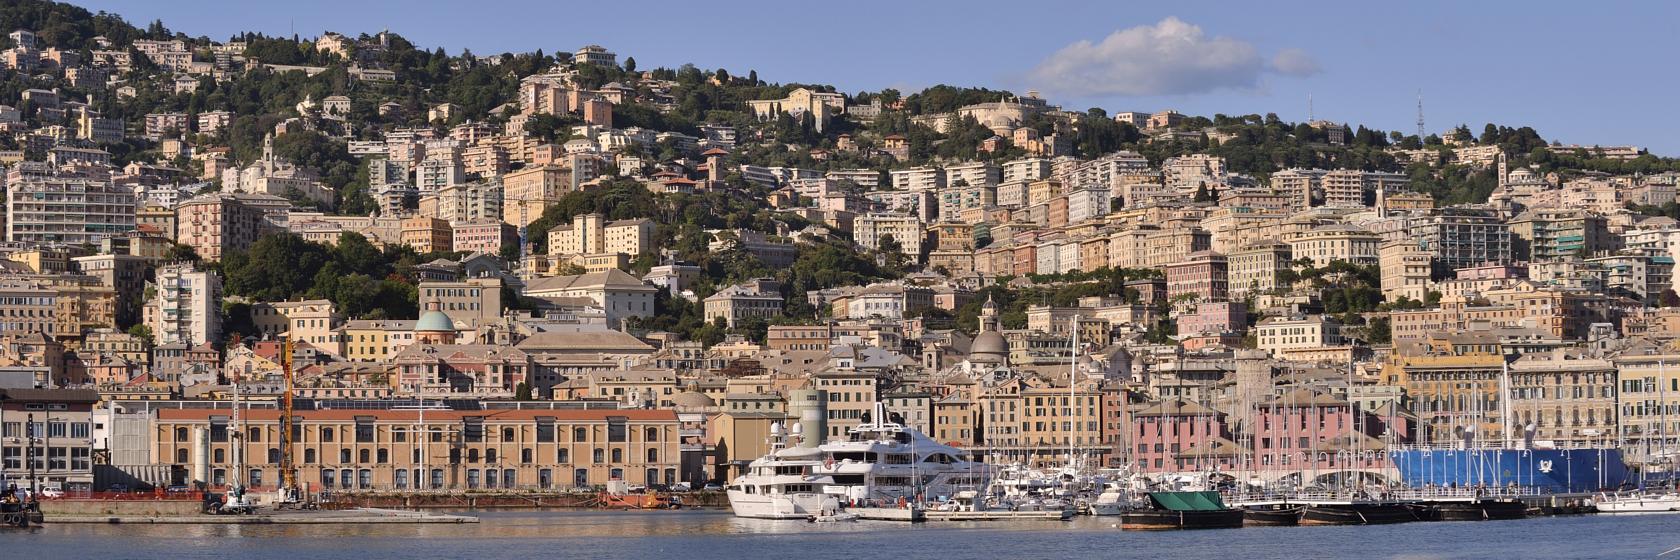 Genoa, Liguria Hotels & Accommodation